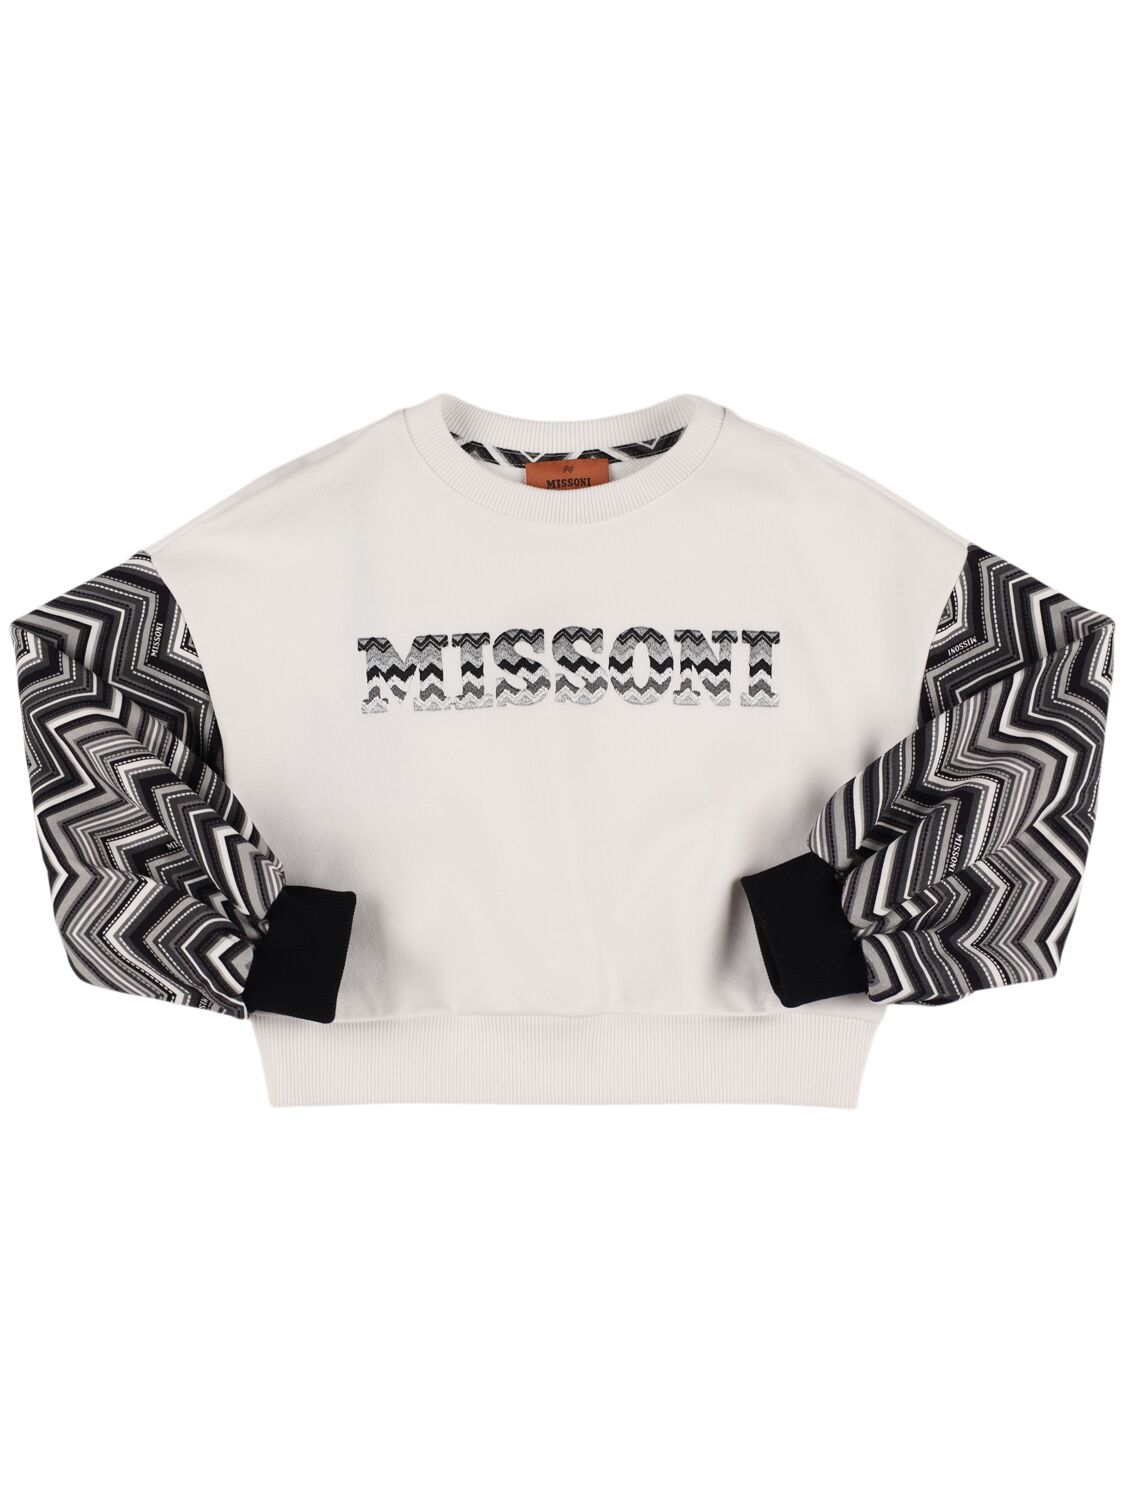 Missoni Kids' Printed Cotton Jersey Sweatshirt In White/black